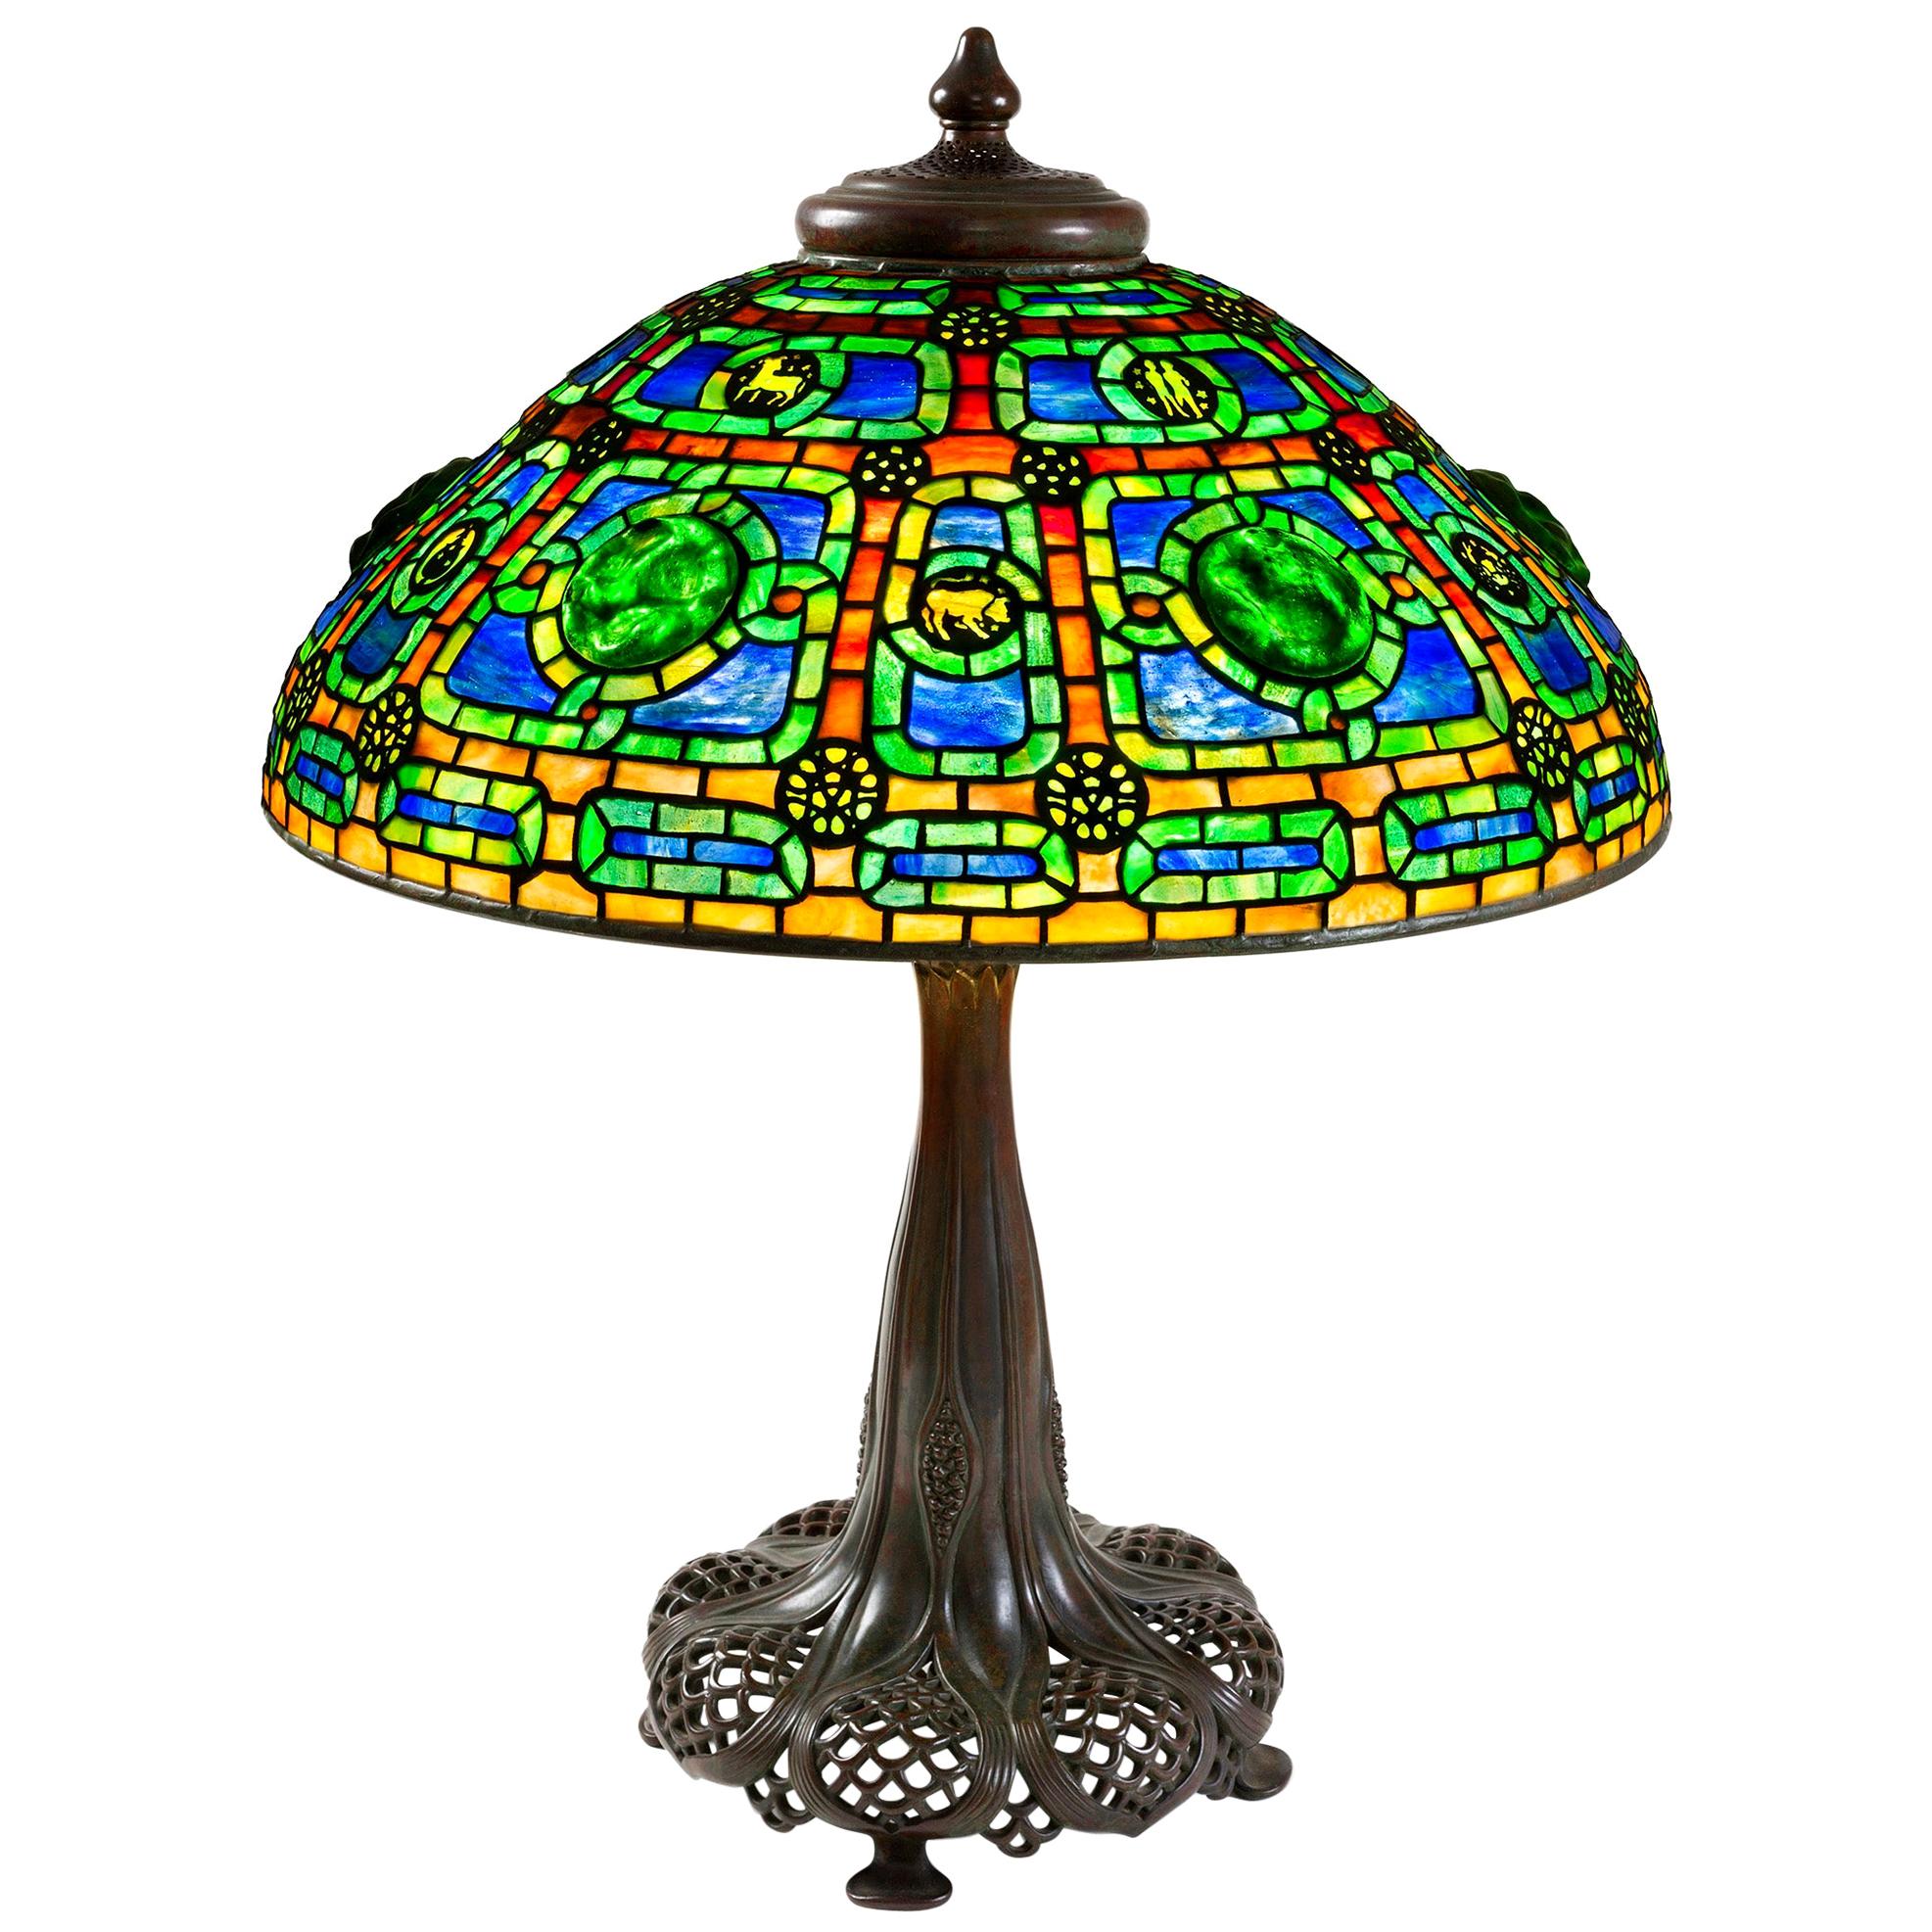 Tiffany Studios New York "Zodiac" Table Lamp